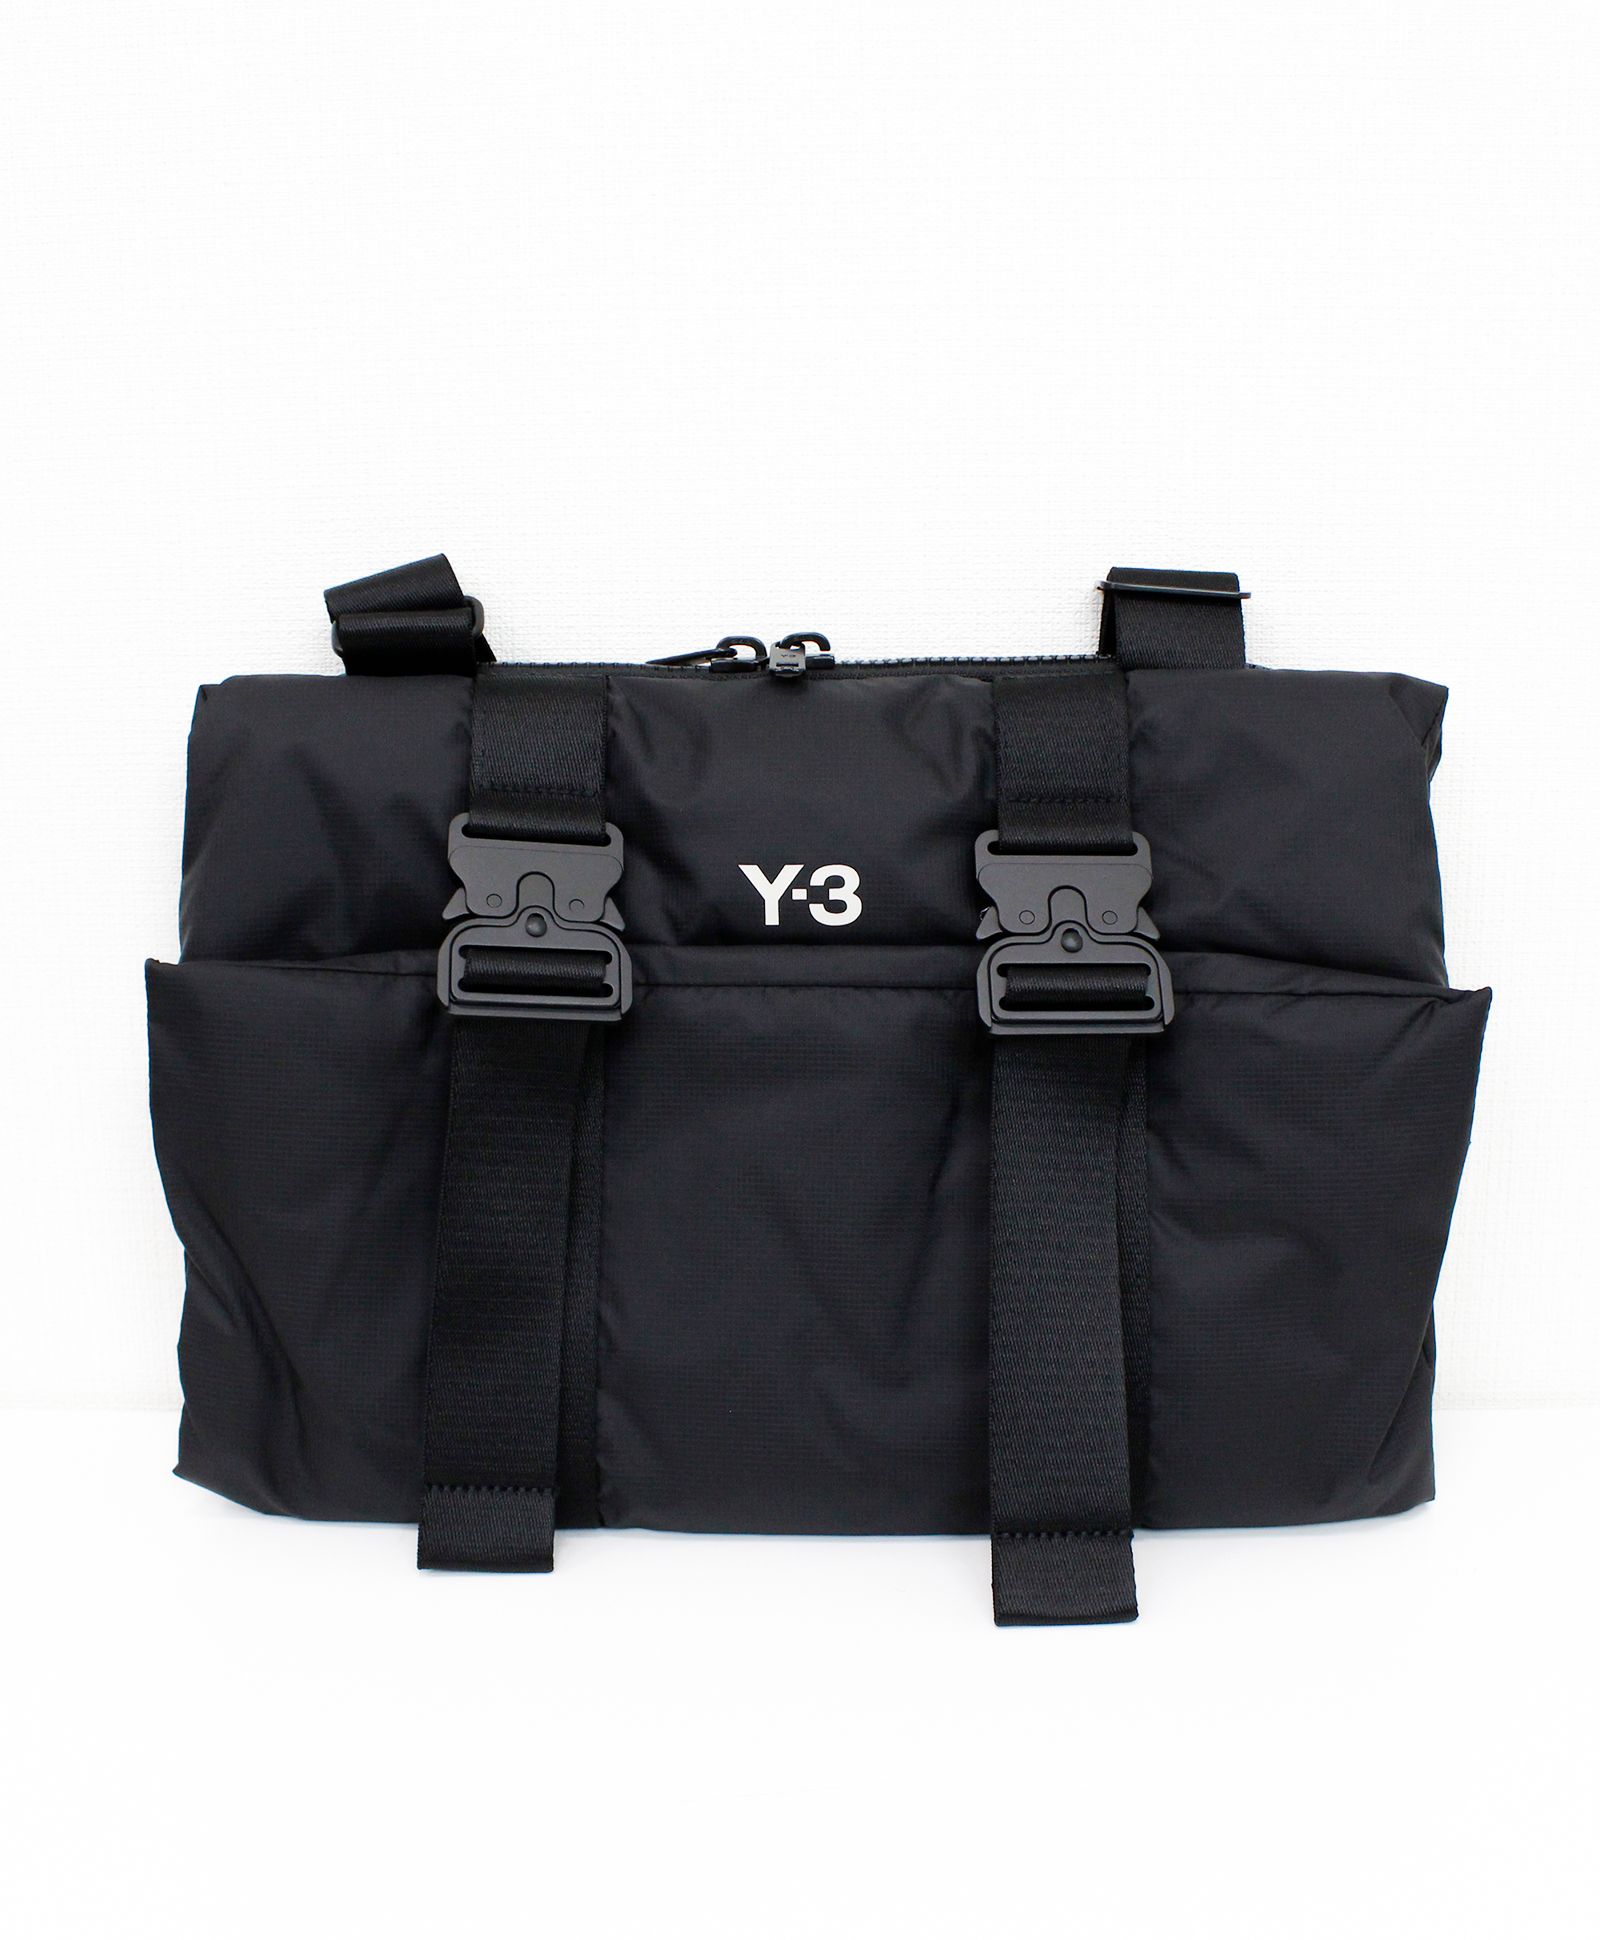 Y-3 - コンバーチブル クロスボディバッグ / Y-3 CN X BODY BAG 